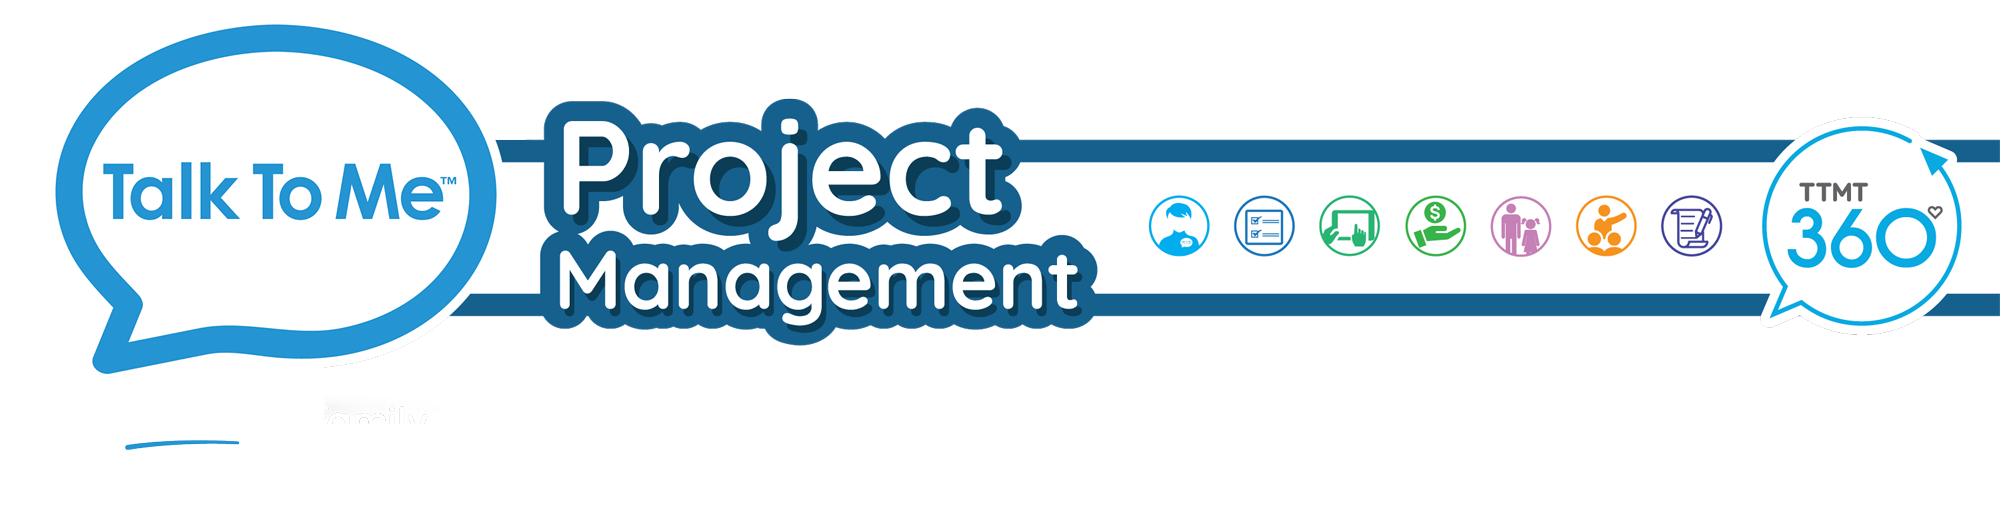 project management header